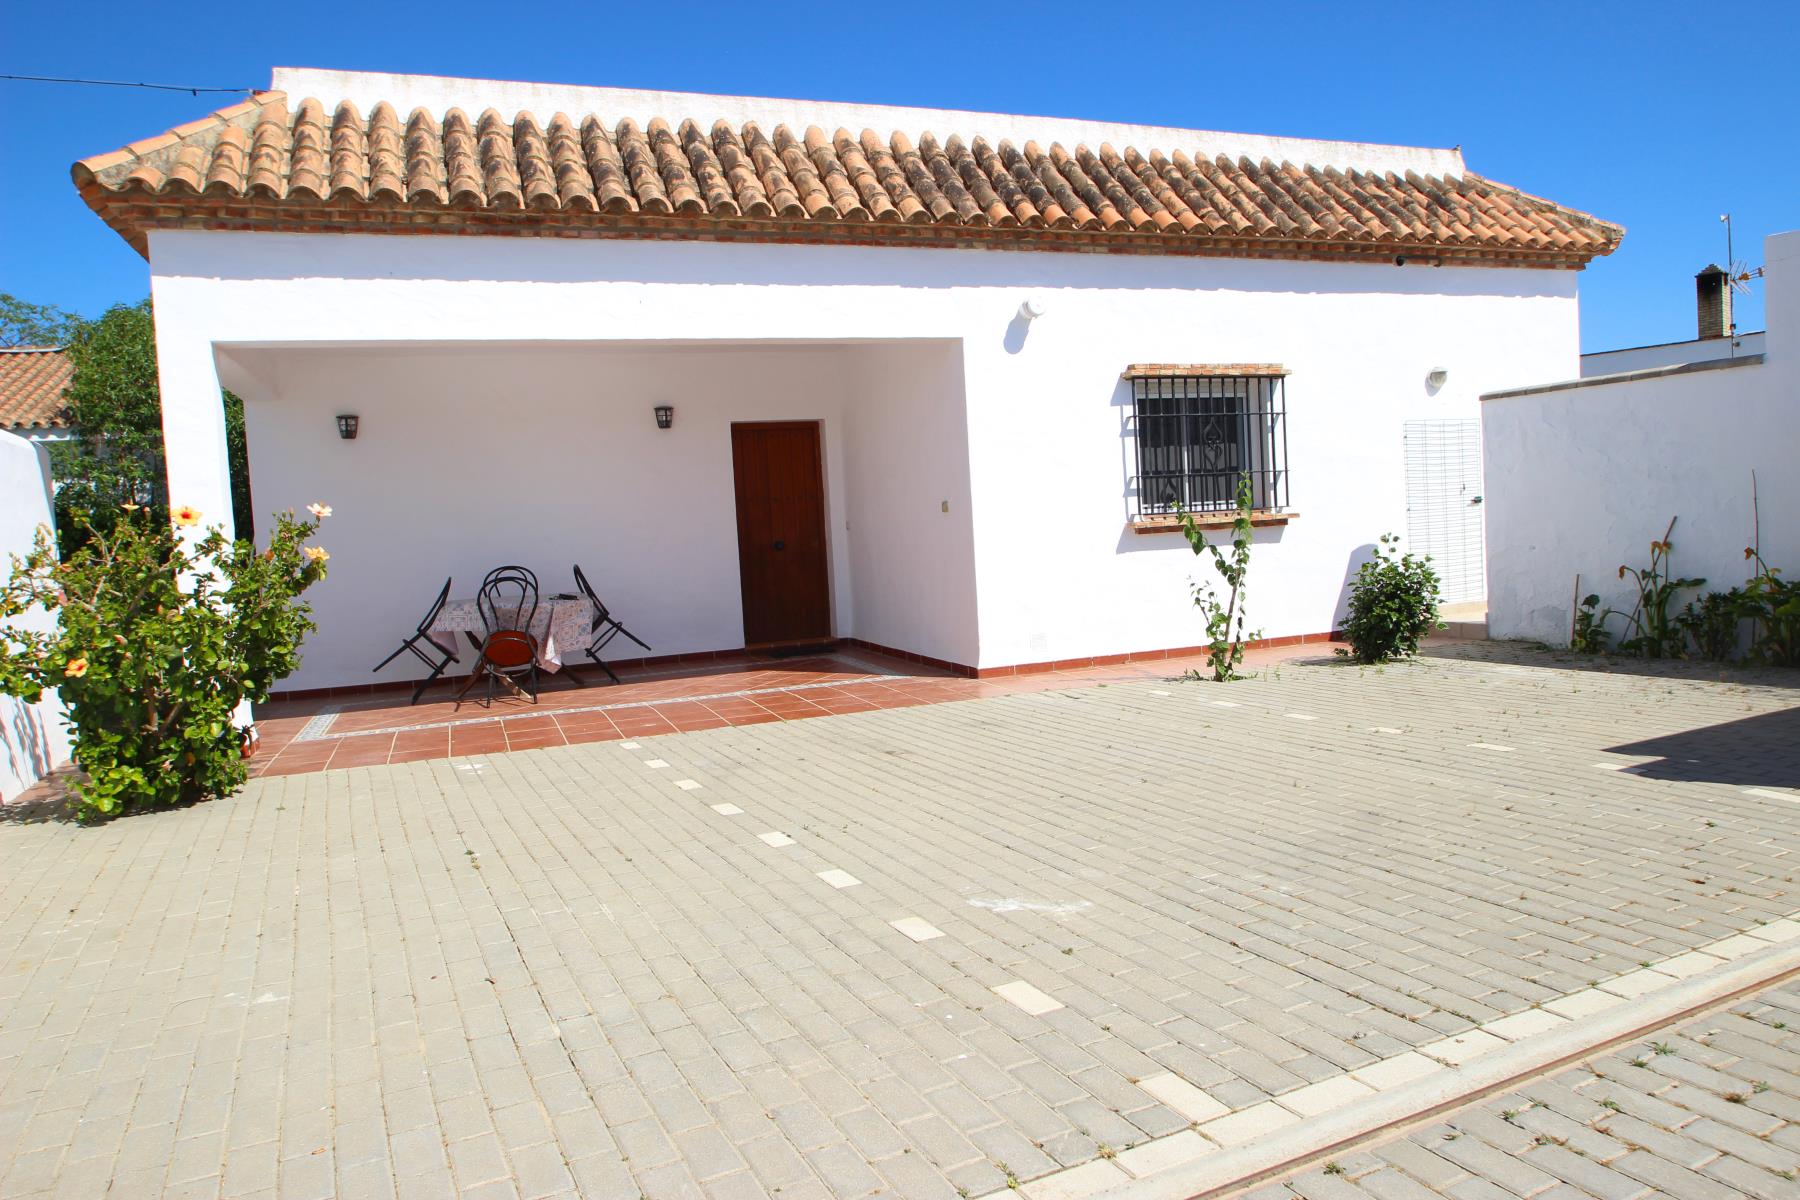 Property for sale in Conil de la Frontera - 116 houses & apartments